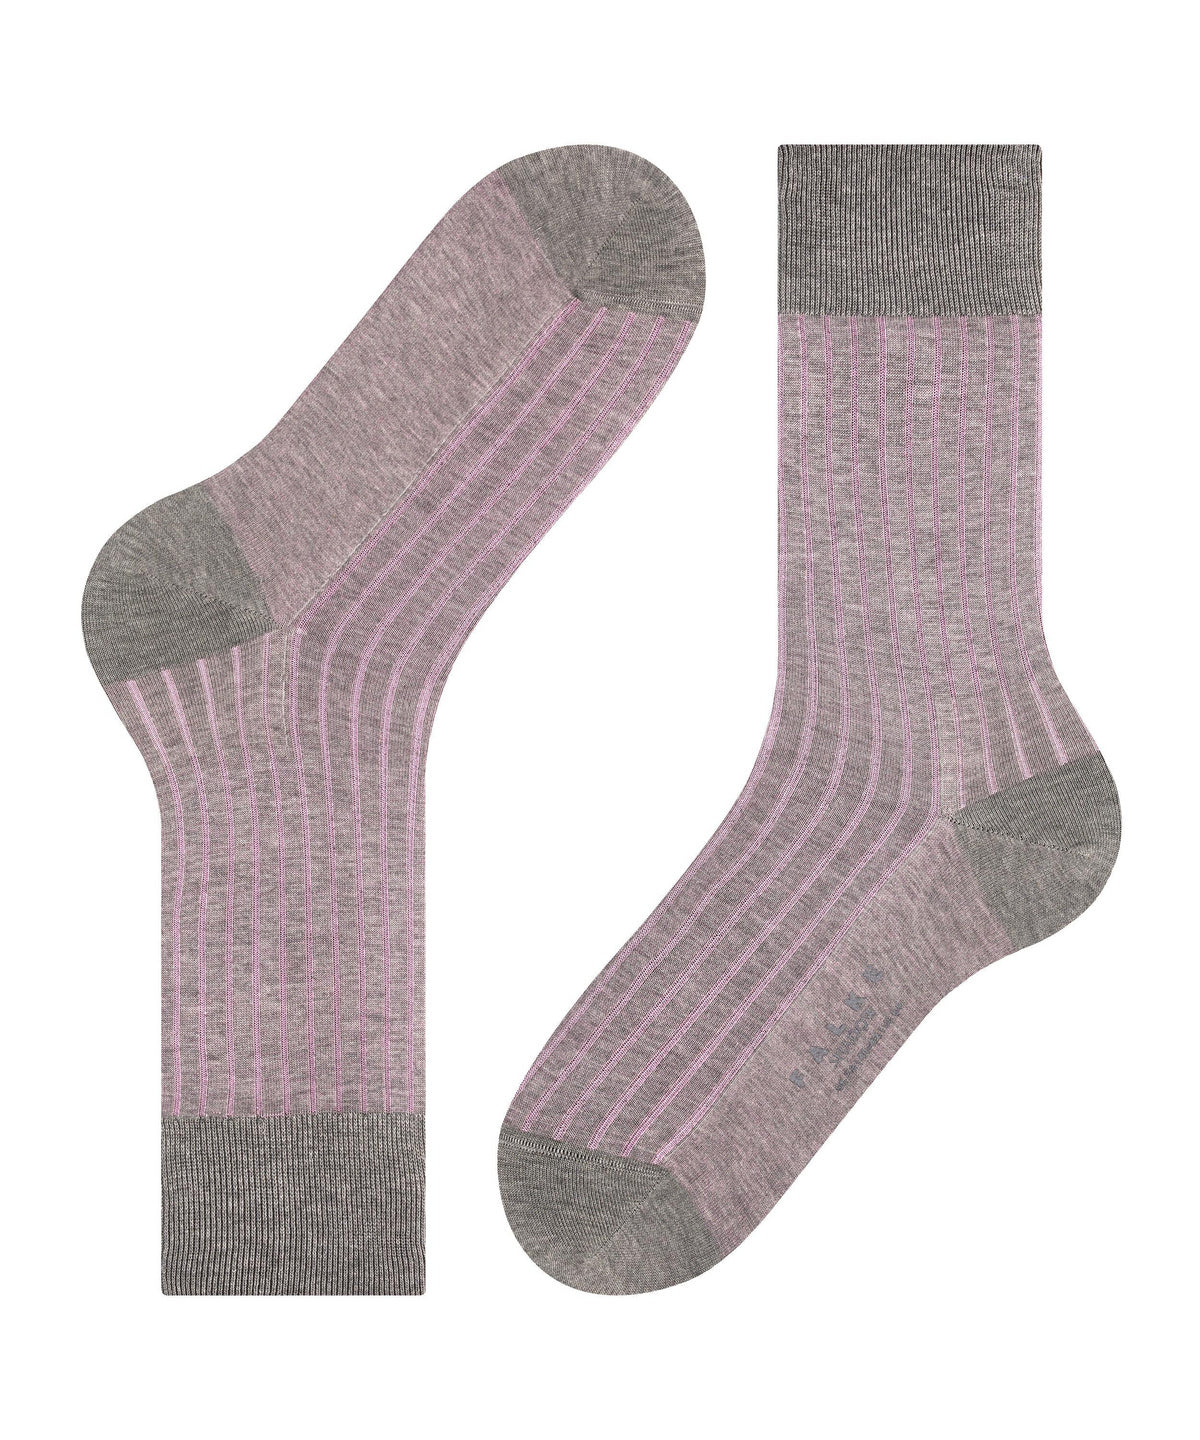 Falke - Socken - Shadow- Grau/Rosé